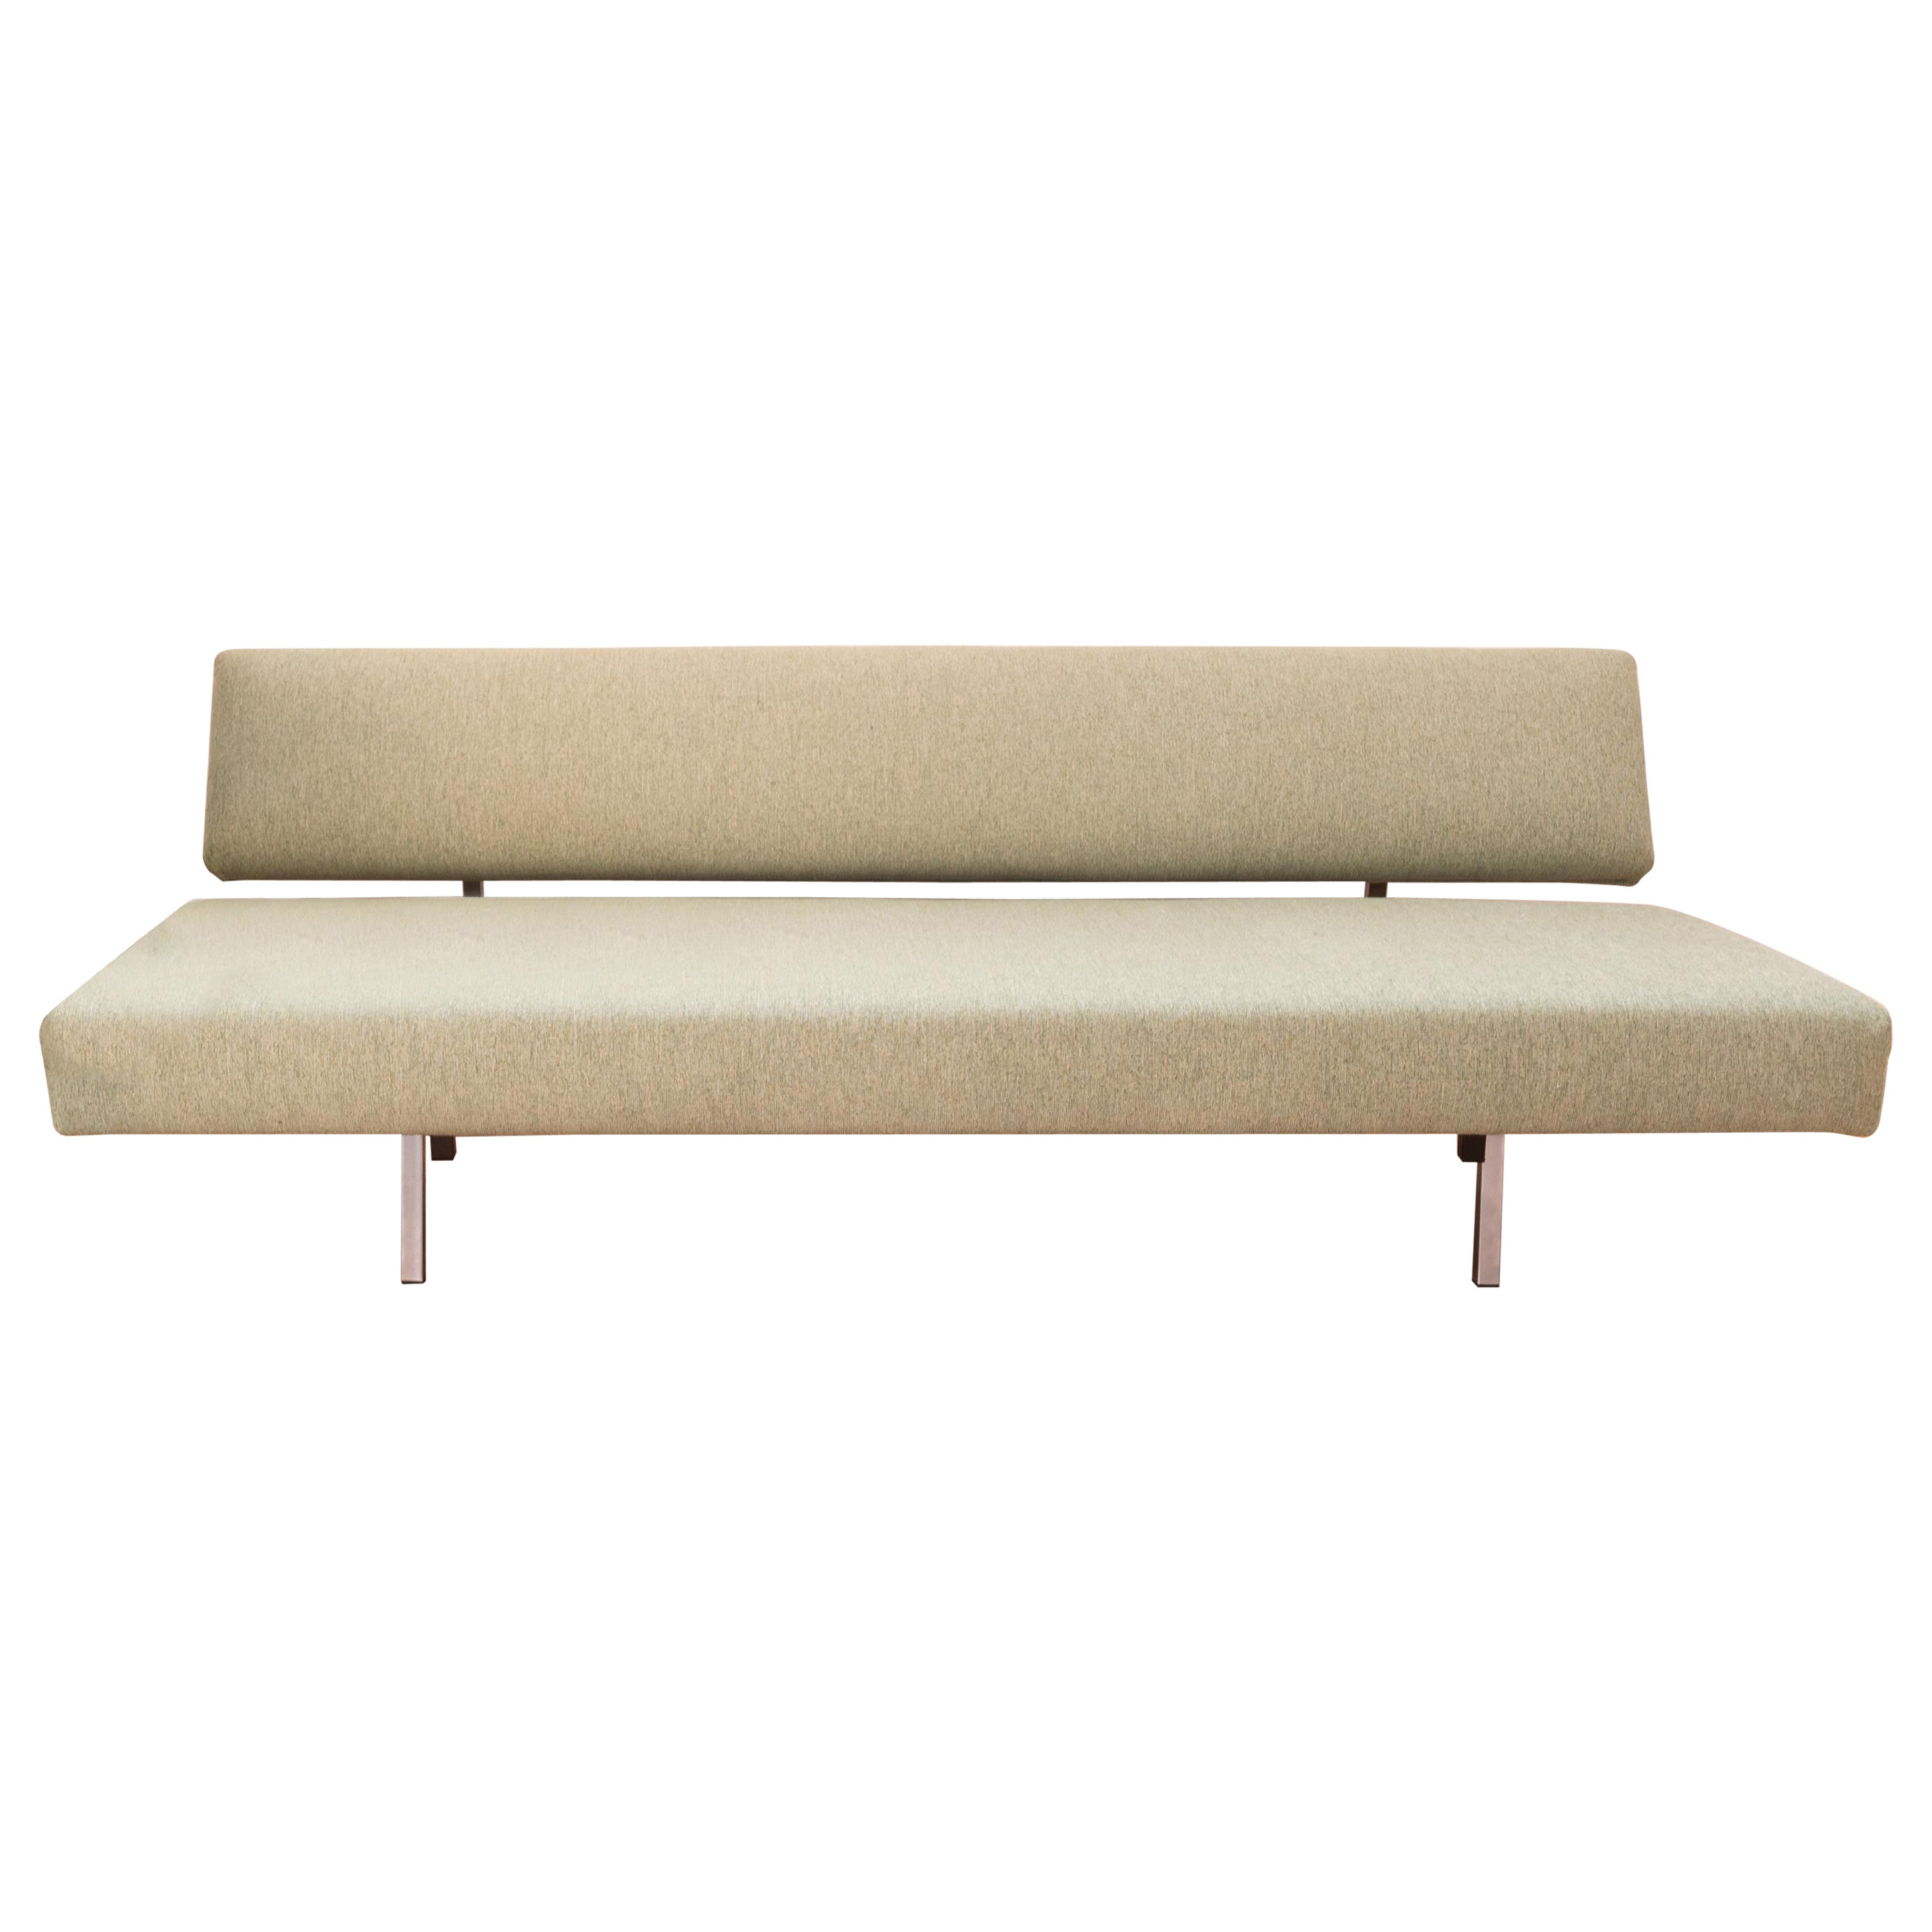 Iconic BR02 Sofa by Martin Visser 'for Spectrum' For Sale